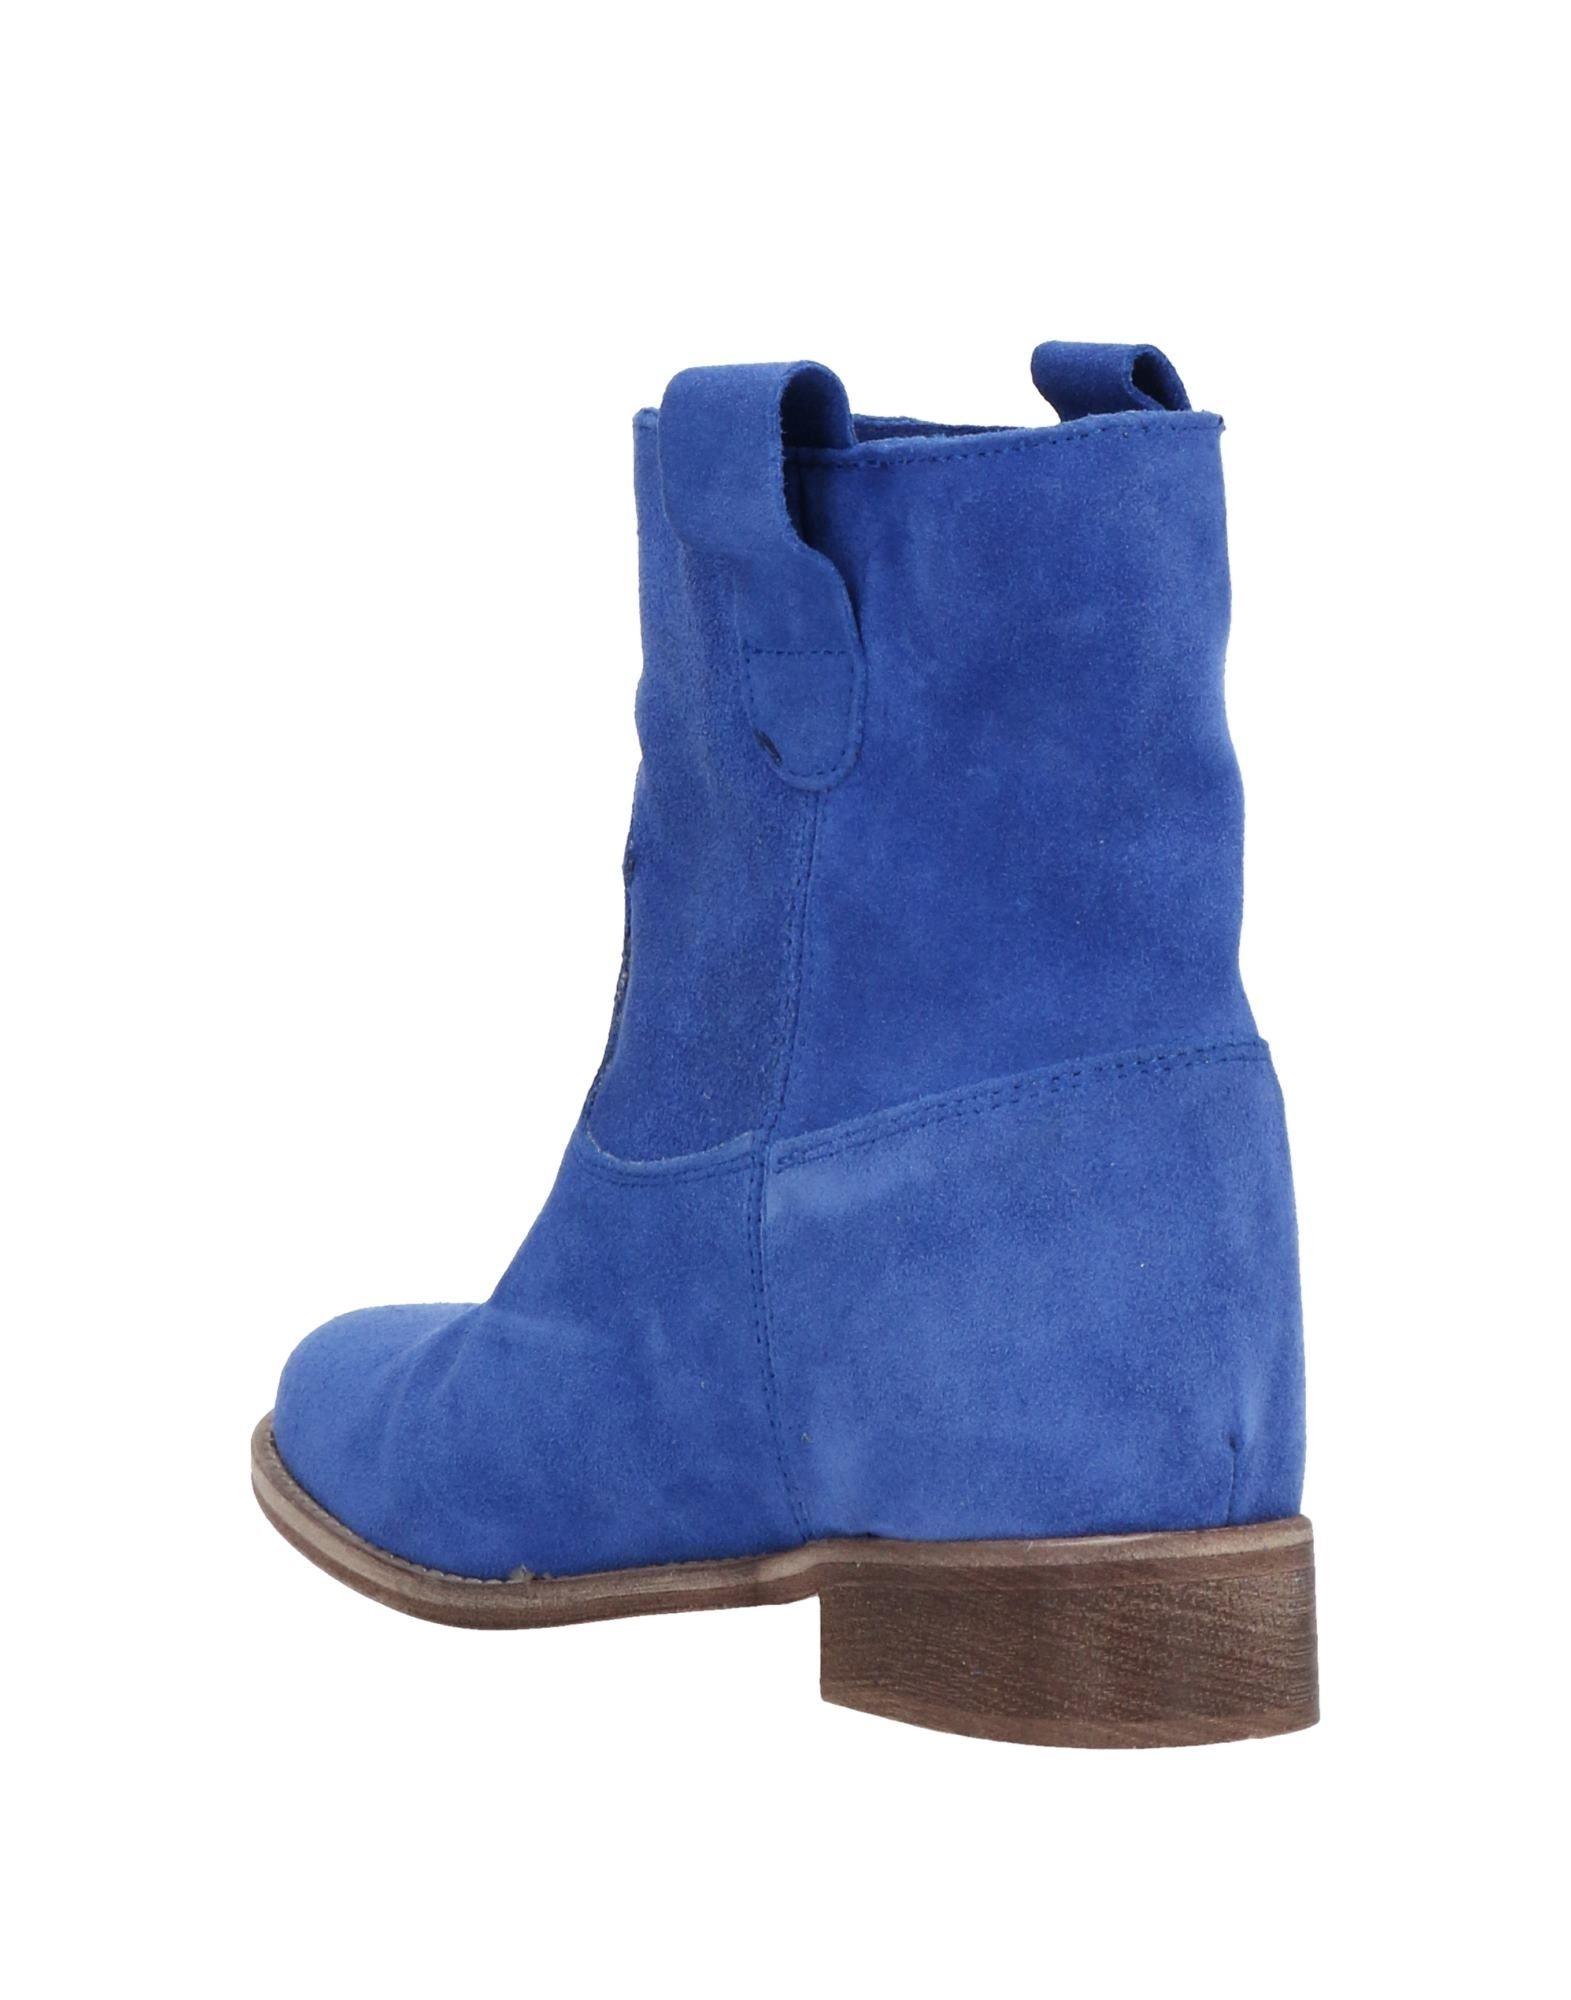 GISÉL MOIRÉ Leather Ankle Boots in Bright Blue (Blue) | Lyst